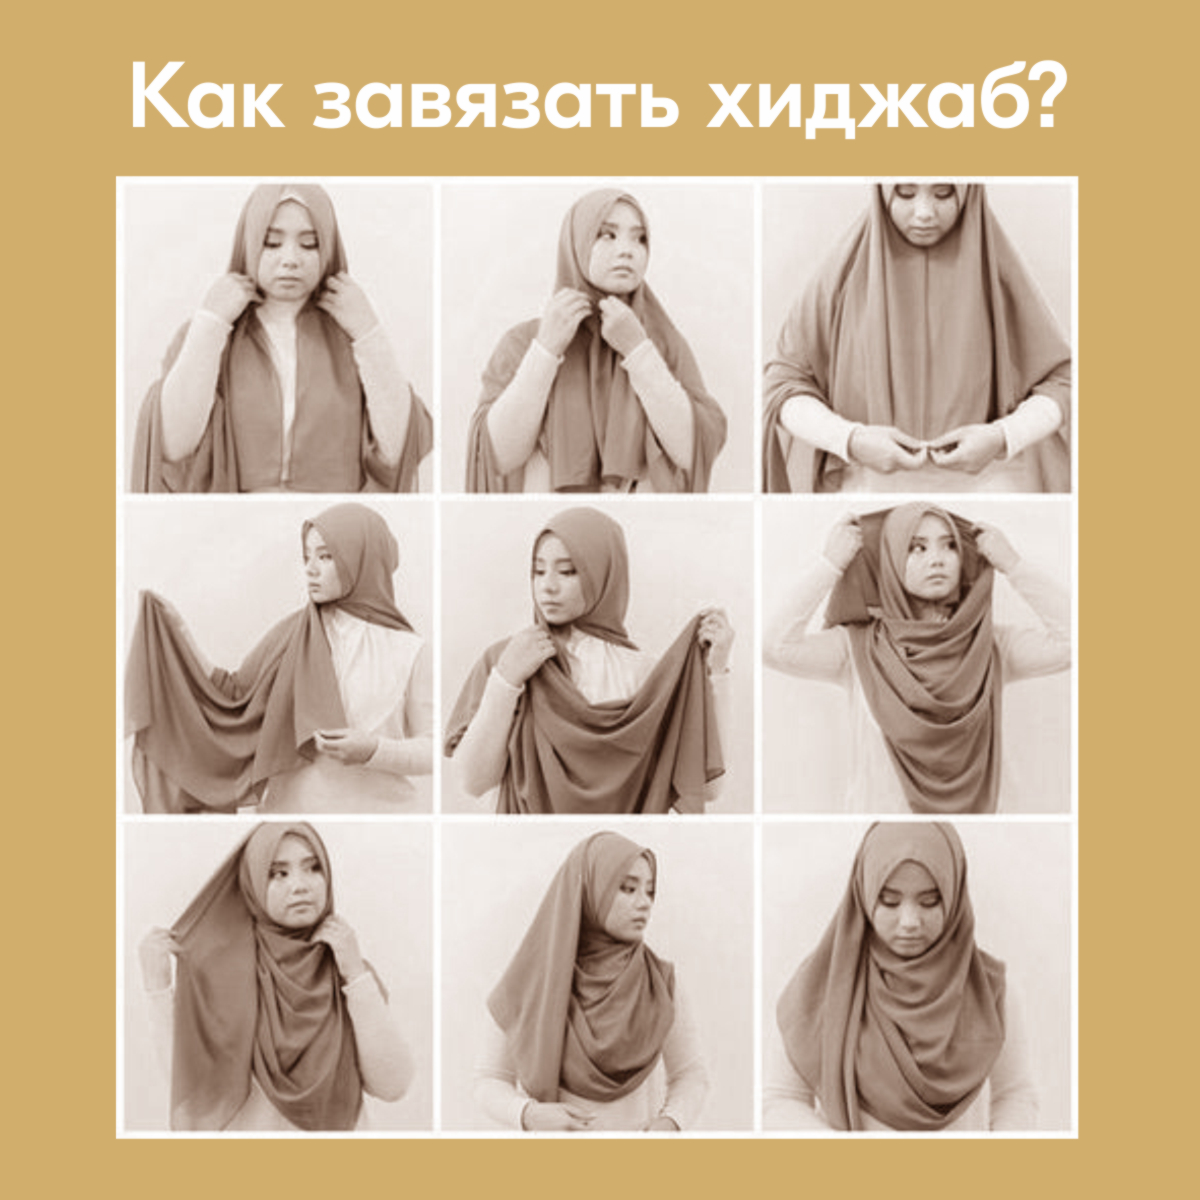 Хиджаб платок женский Asiyah AY-HJB3-01 красный р. 170x60